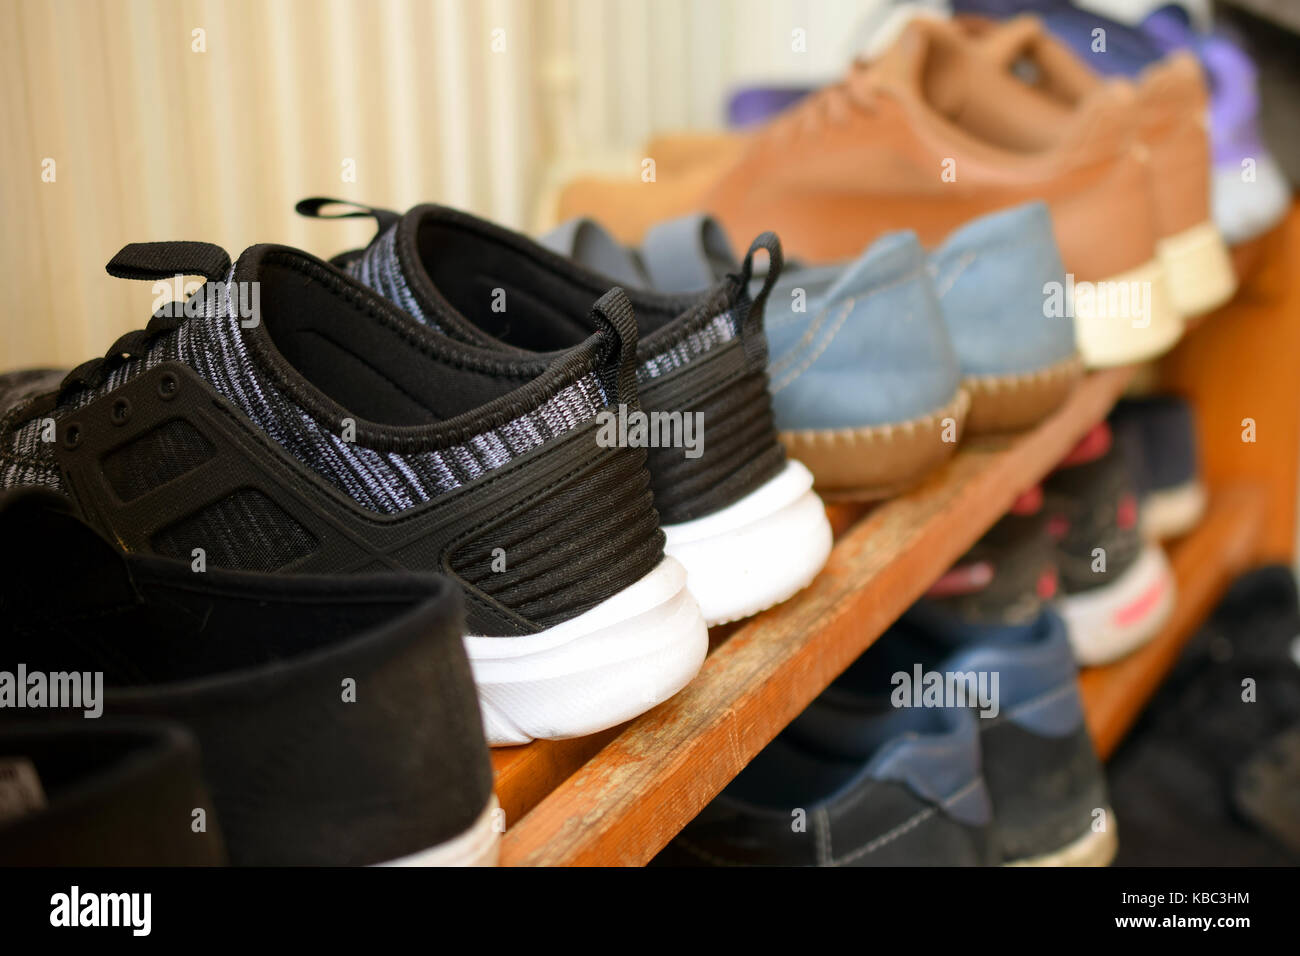 Chaussures Chaussures en bois. close up side view image. Banque D'Images